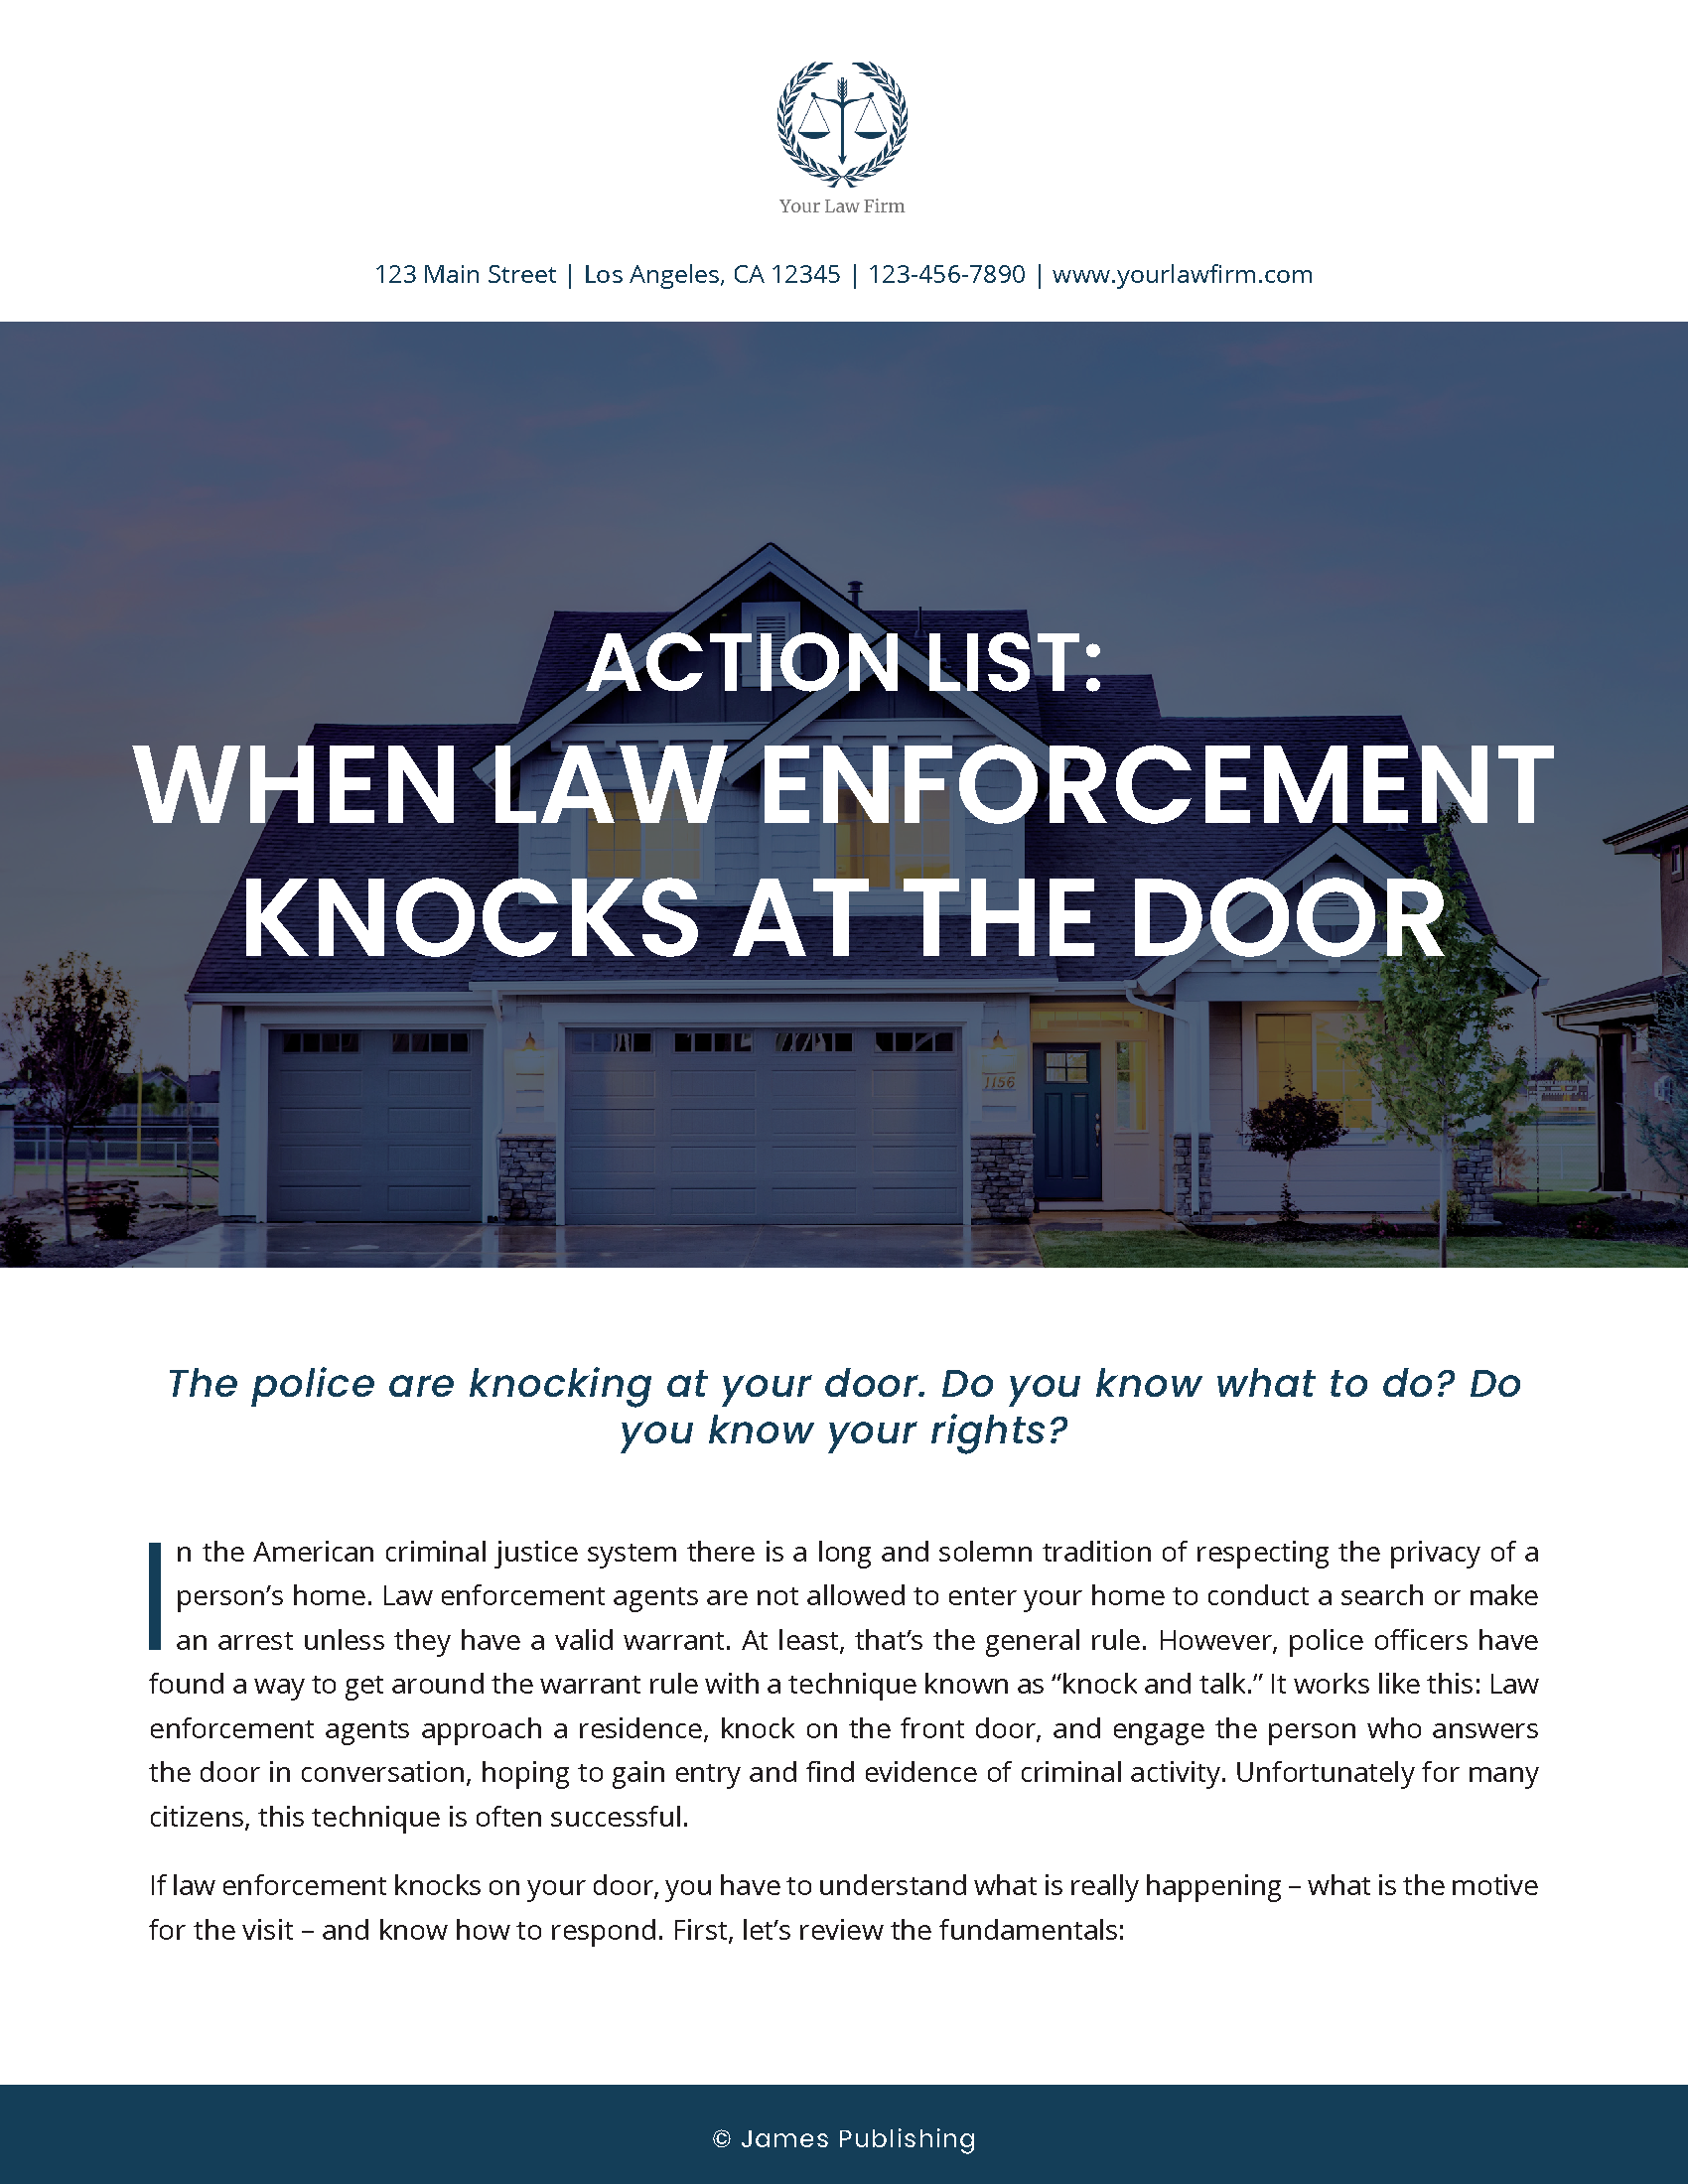 CRIM-13 Action List - When Law Enforcement Knocks at the Door